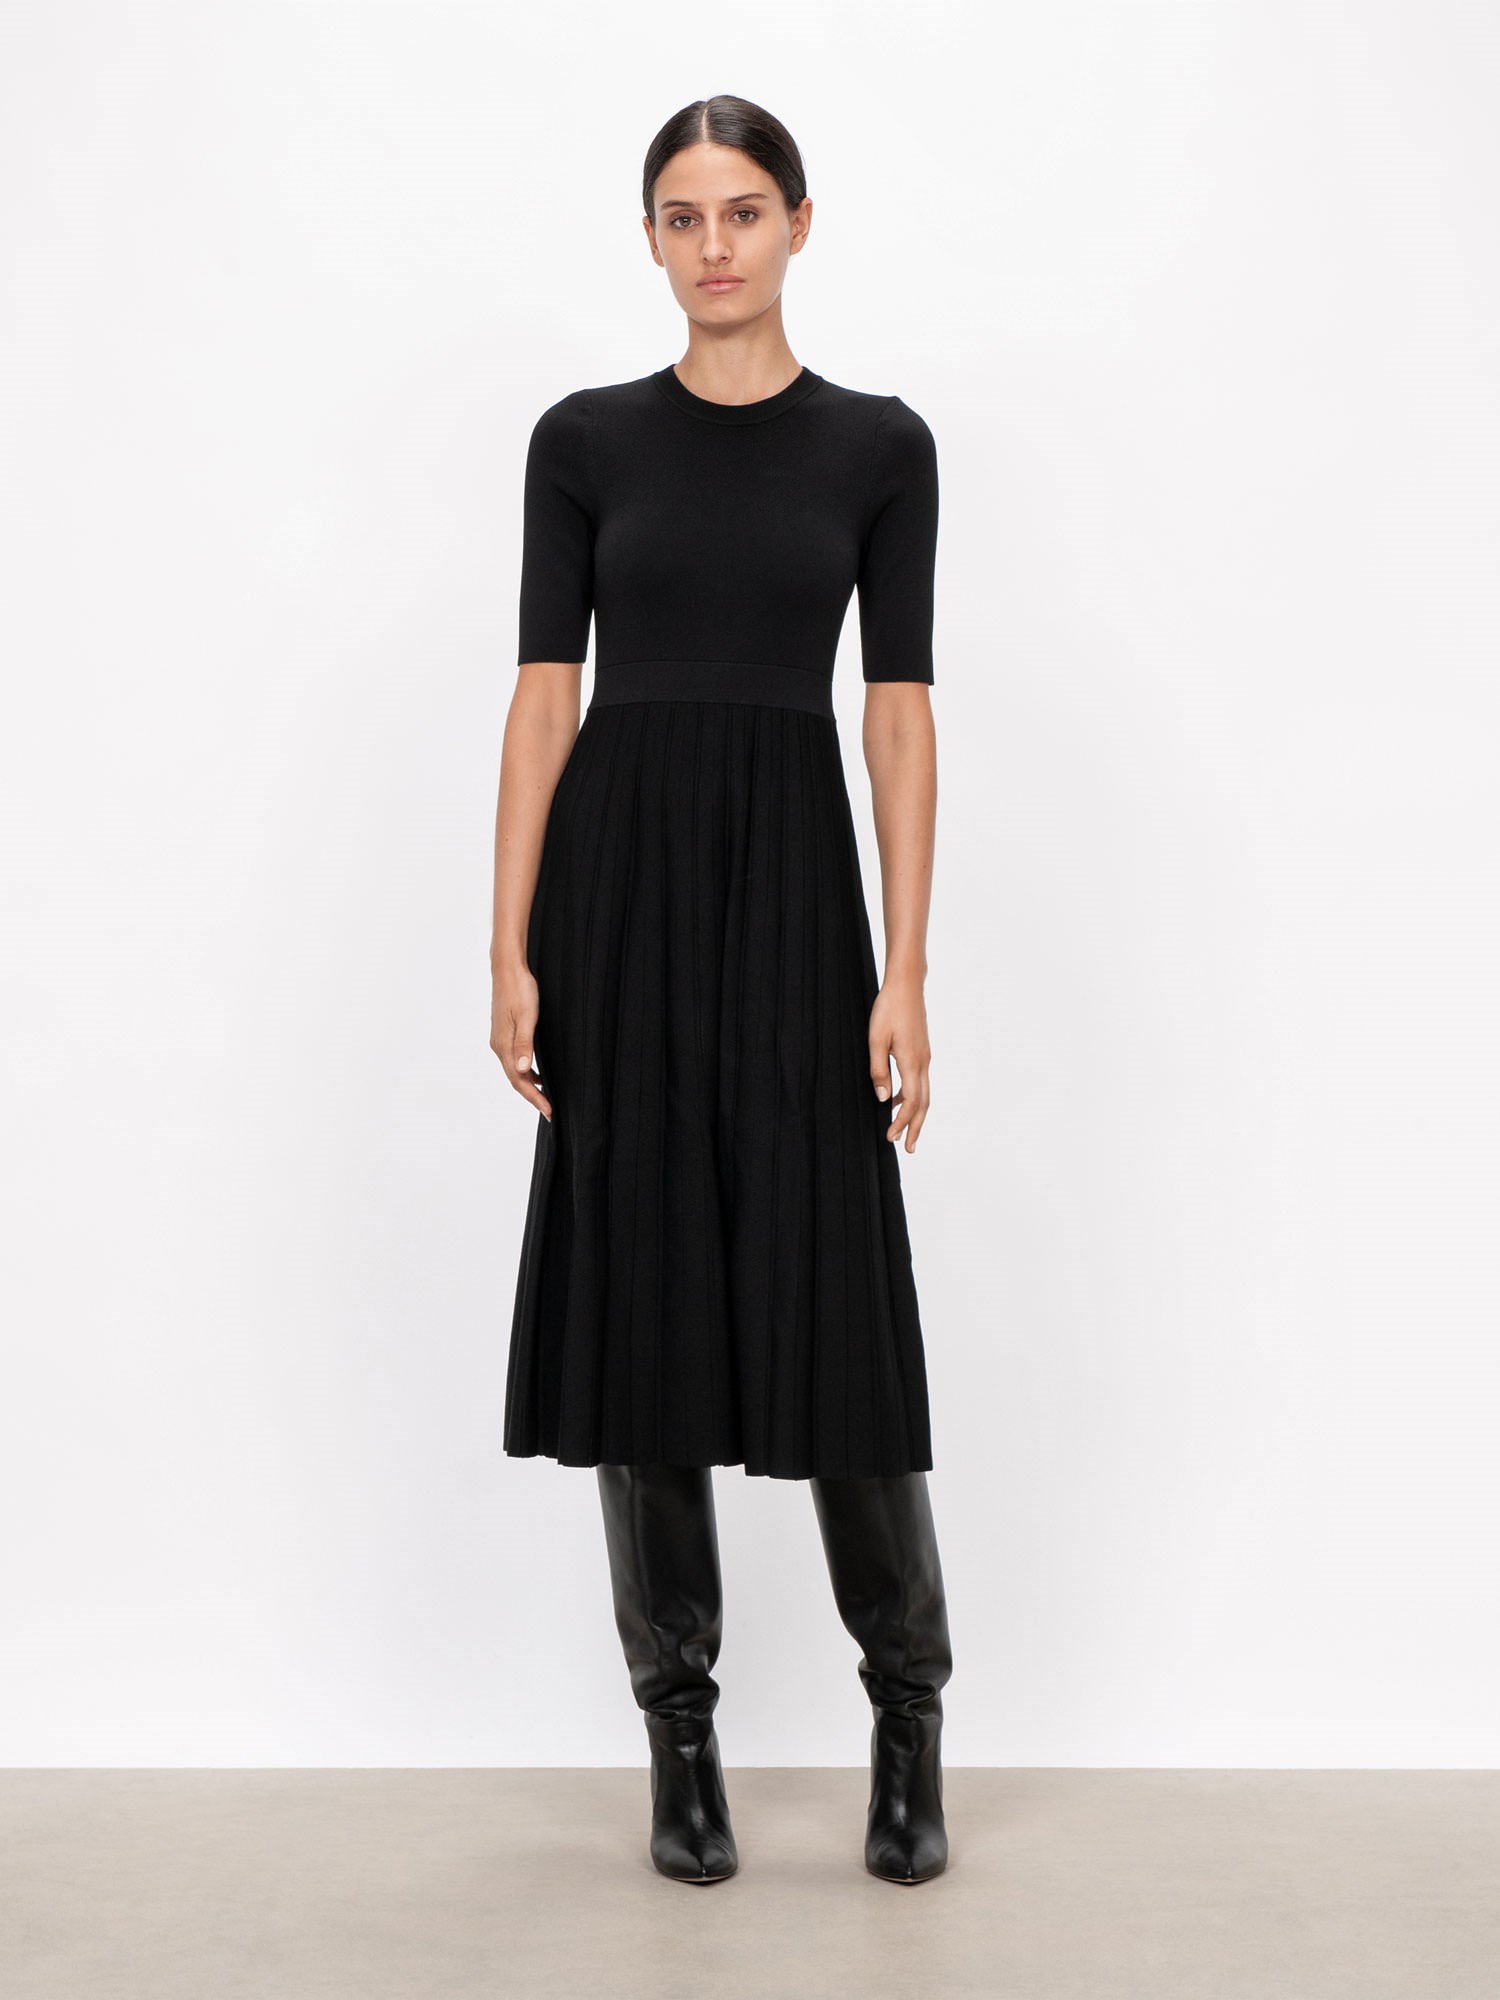 Elbow Sleeve Pleated Knit Dress | Buy Dresses Online - Veronika Maine